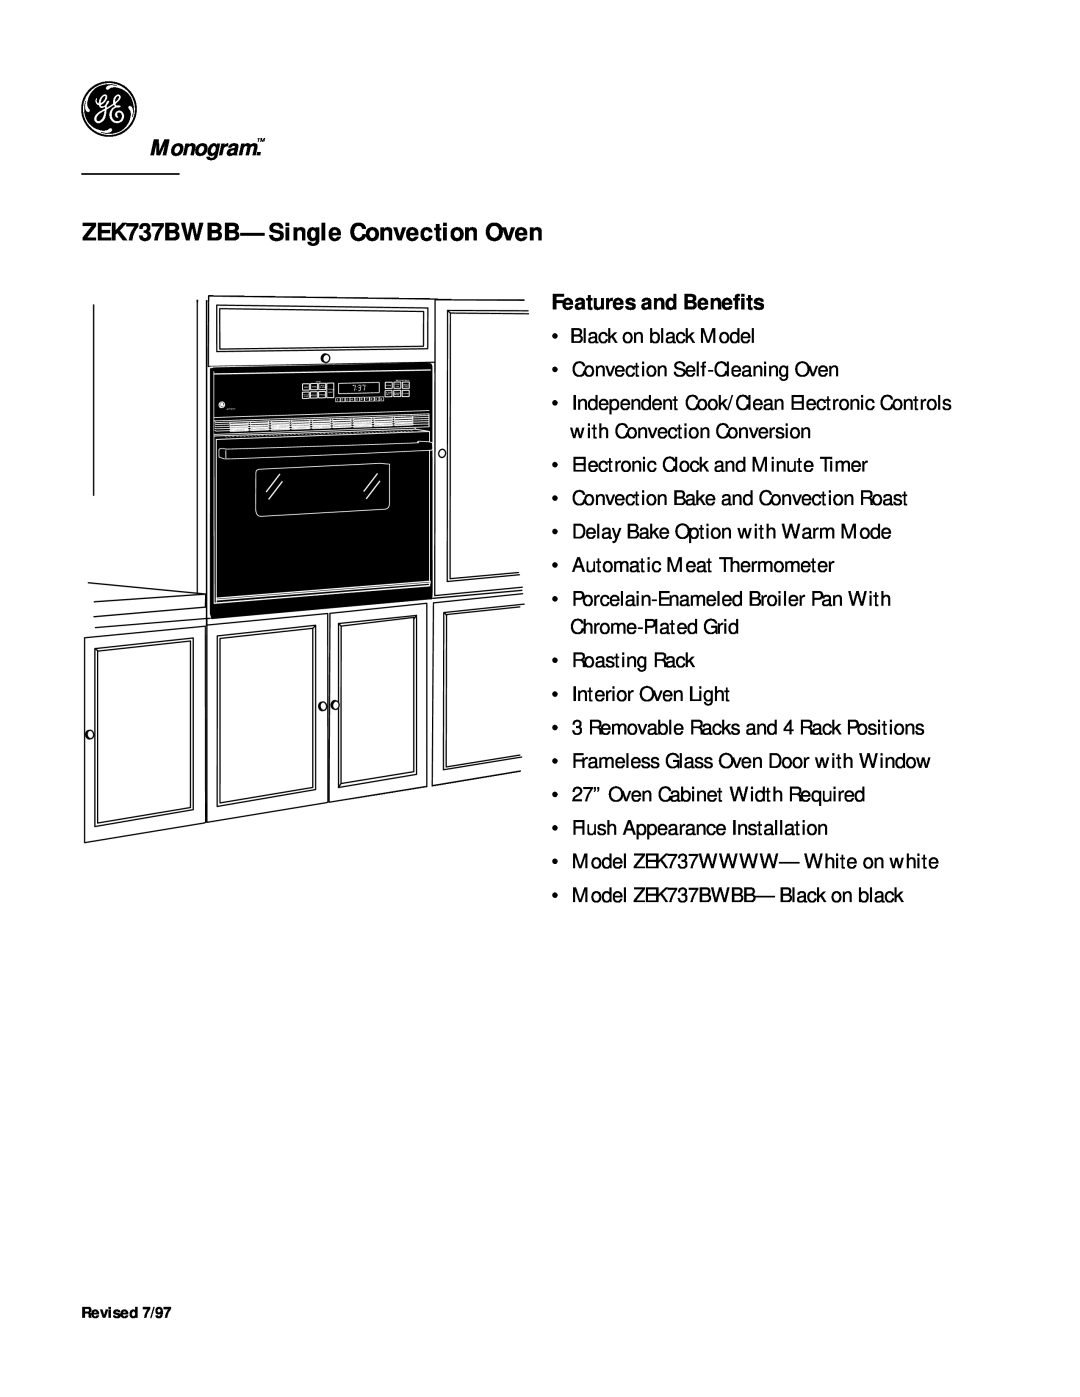 GE dimensions ZEK737BWBB-SingleConvection Oven, Monogram, Features and Benefits 